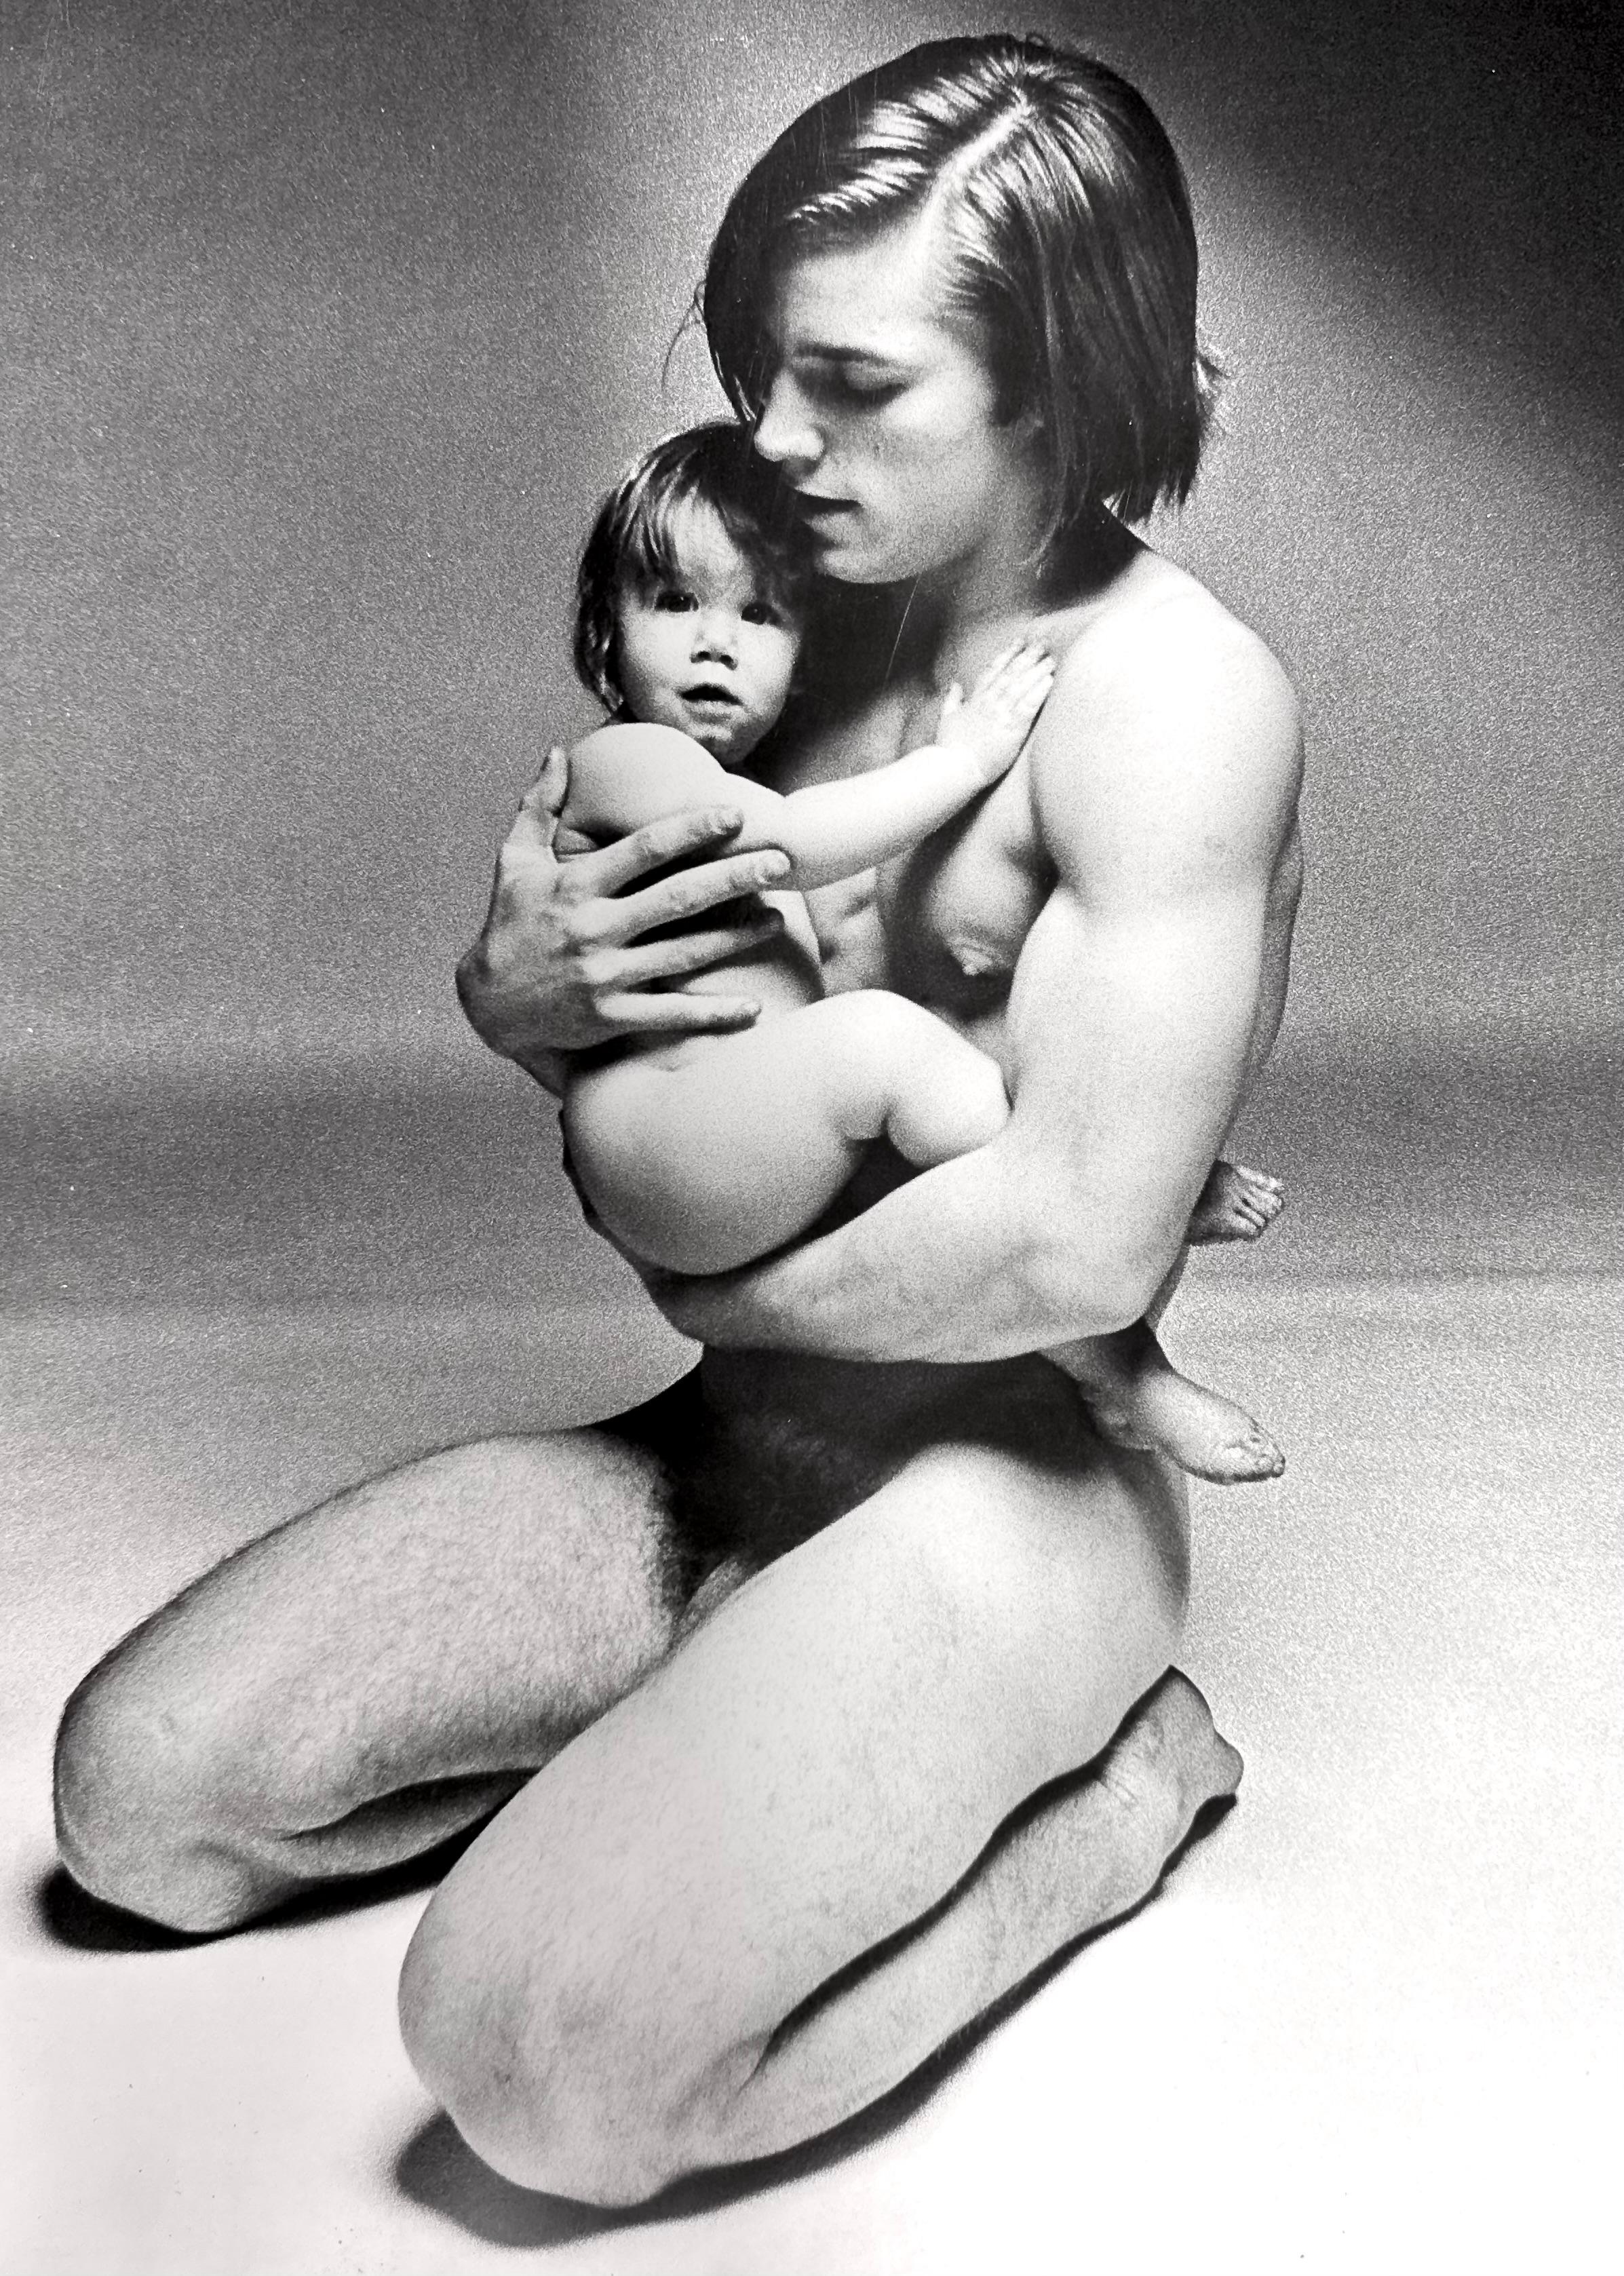 Francesco Scavullo, Andy Warhol's Flesh: Joe Dallesandro with Child II, 1968 For Sale 1